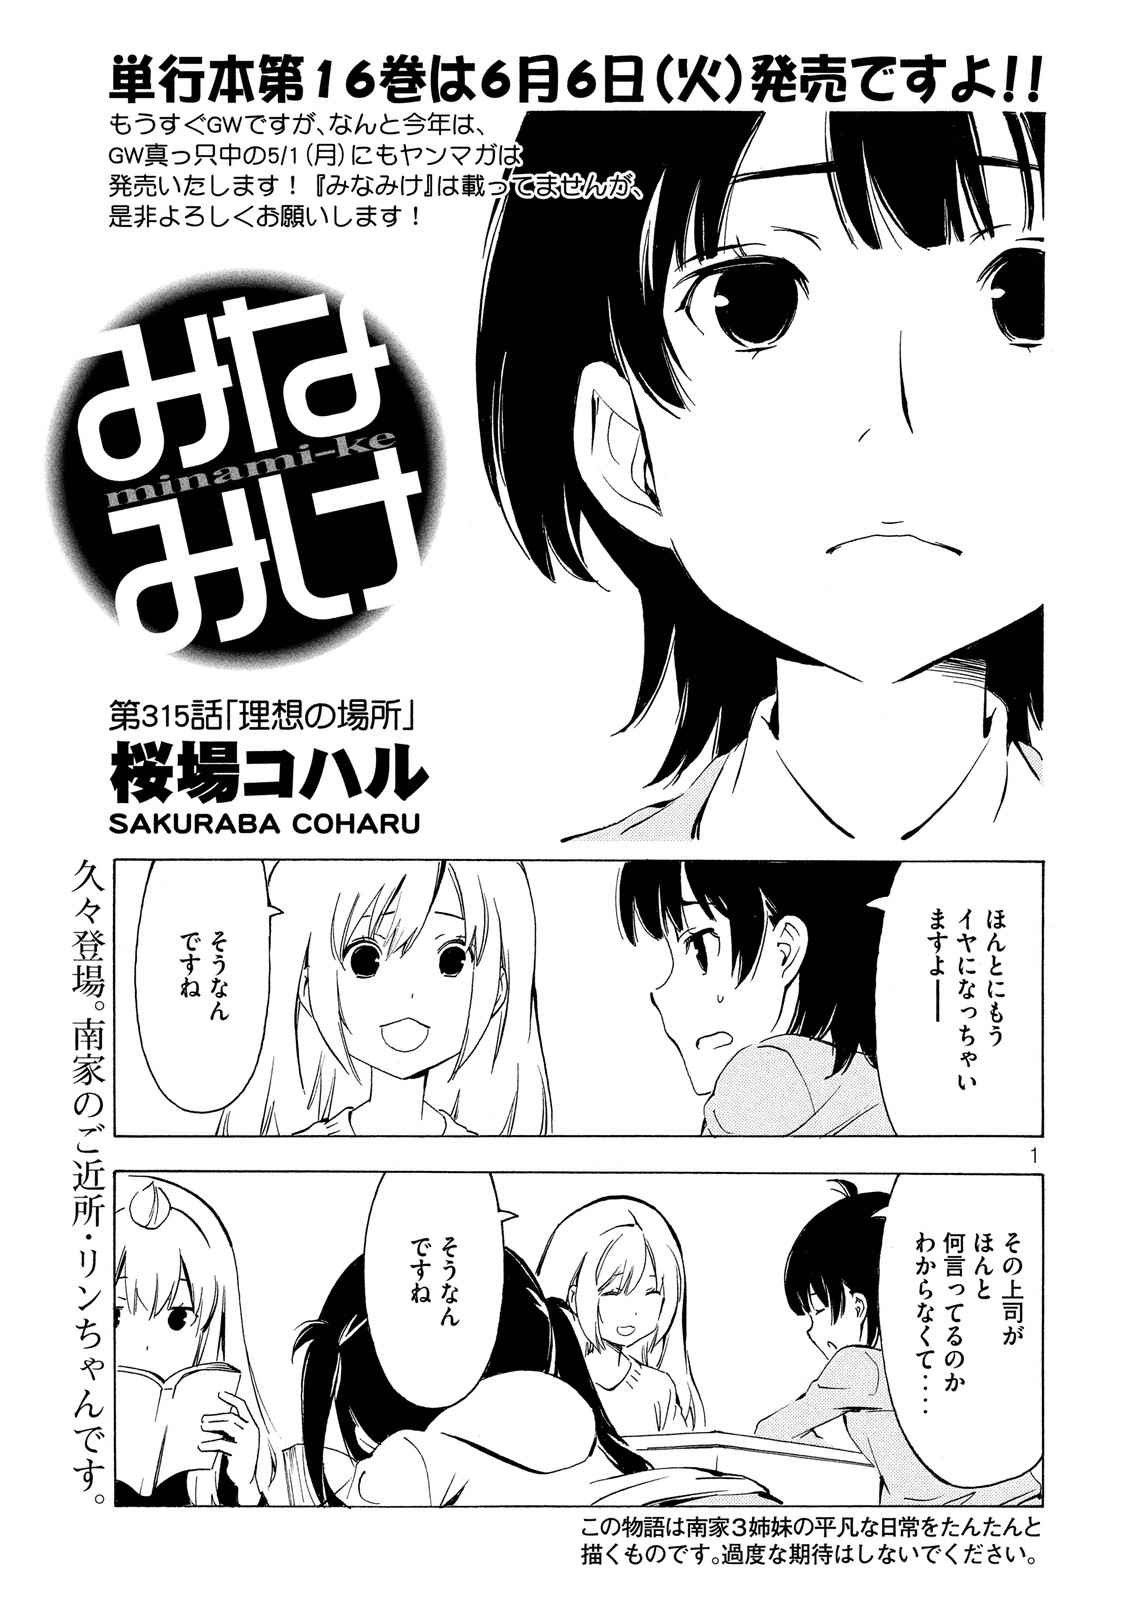 Minami-ke - Chapter 315 - Page 1